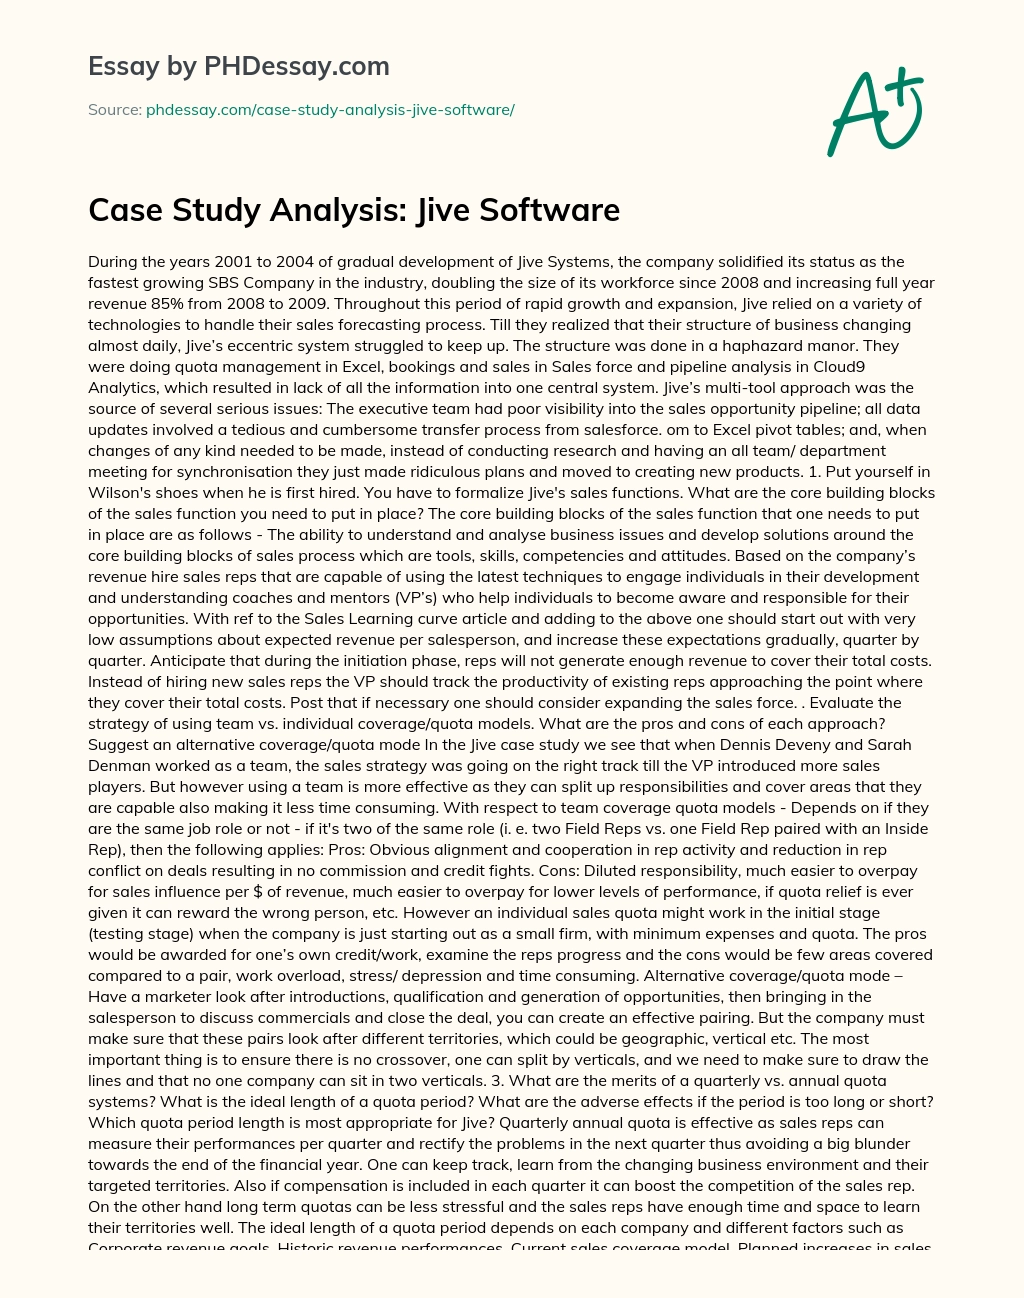 Case Study Analysis: Jive Software essay